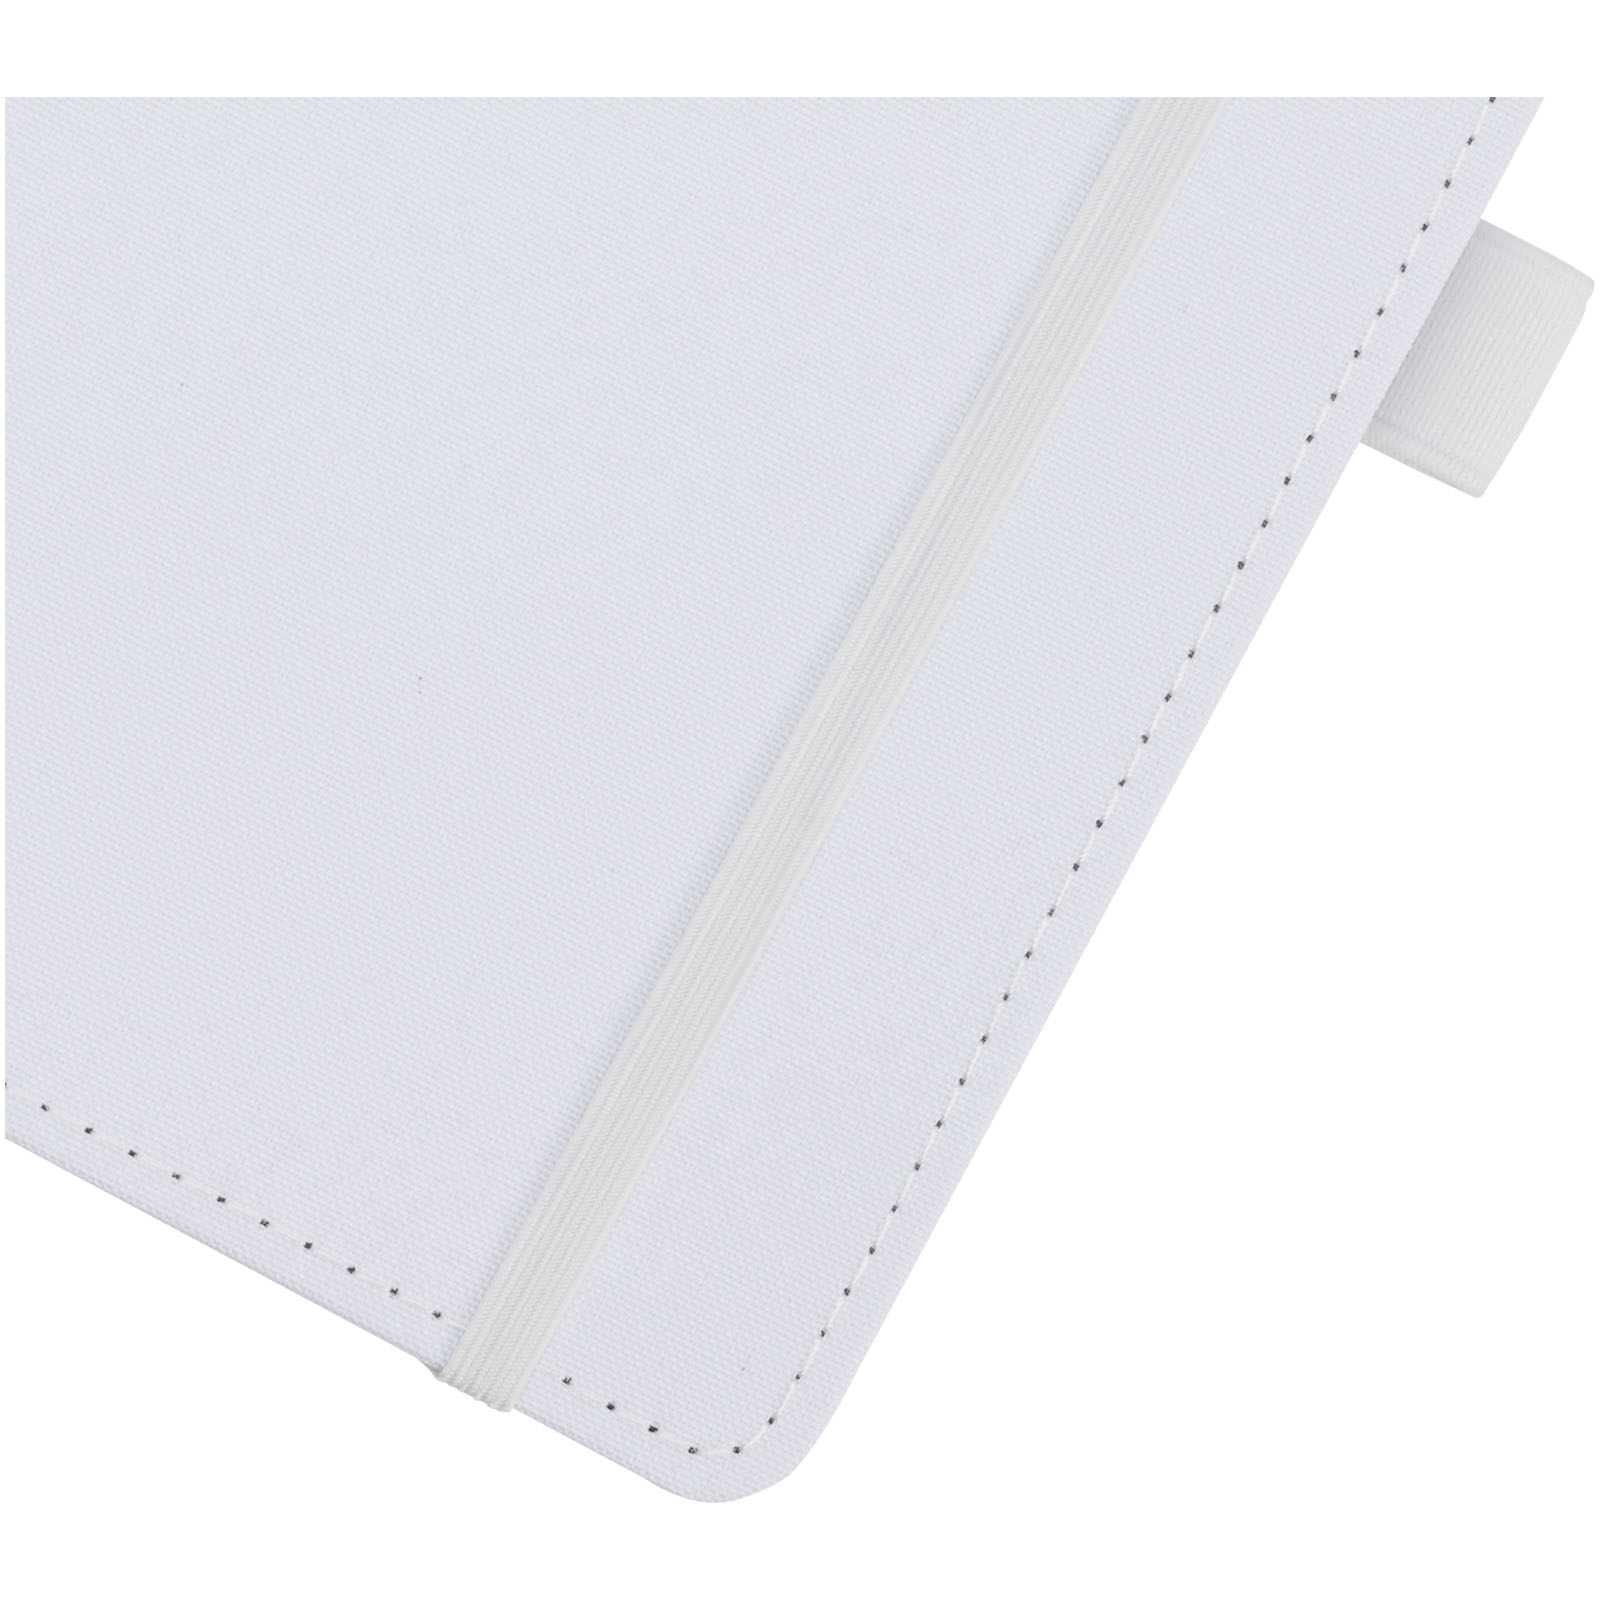 Advertising Hard cover notebooks - Thalaasa ocean-bound plastic hardcover notebook - 5